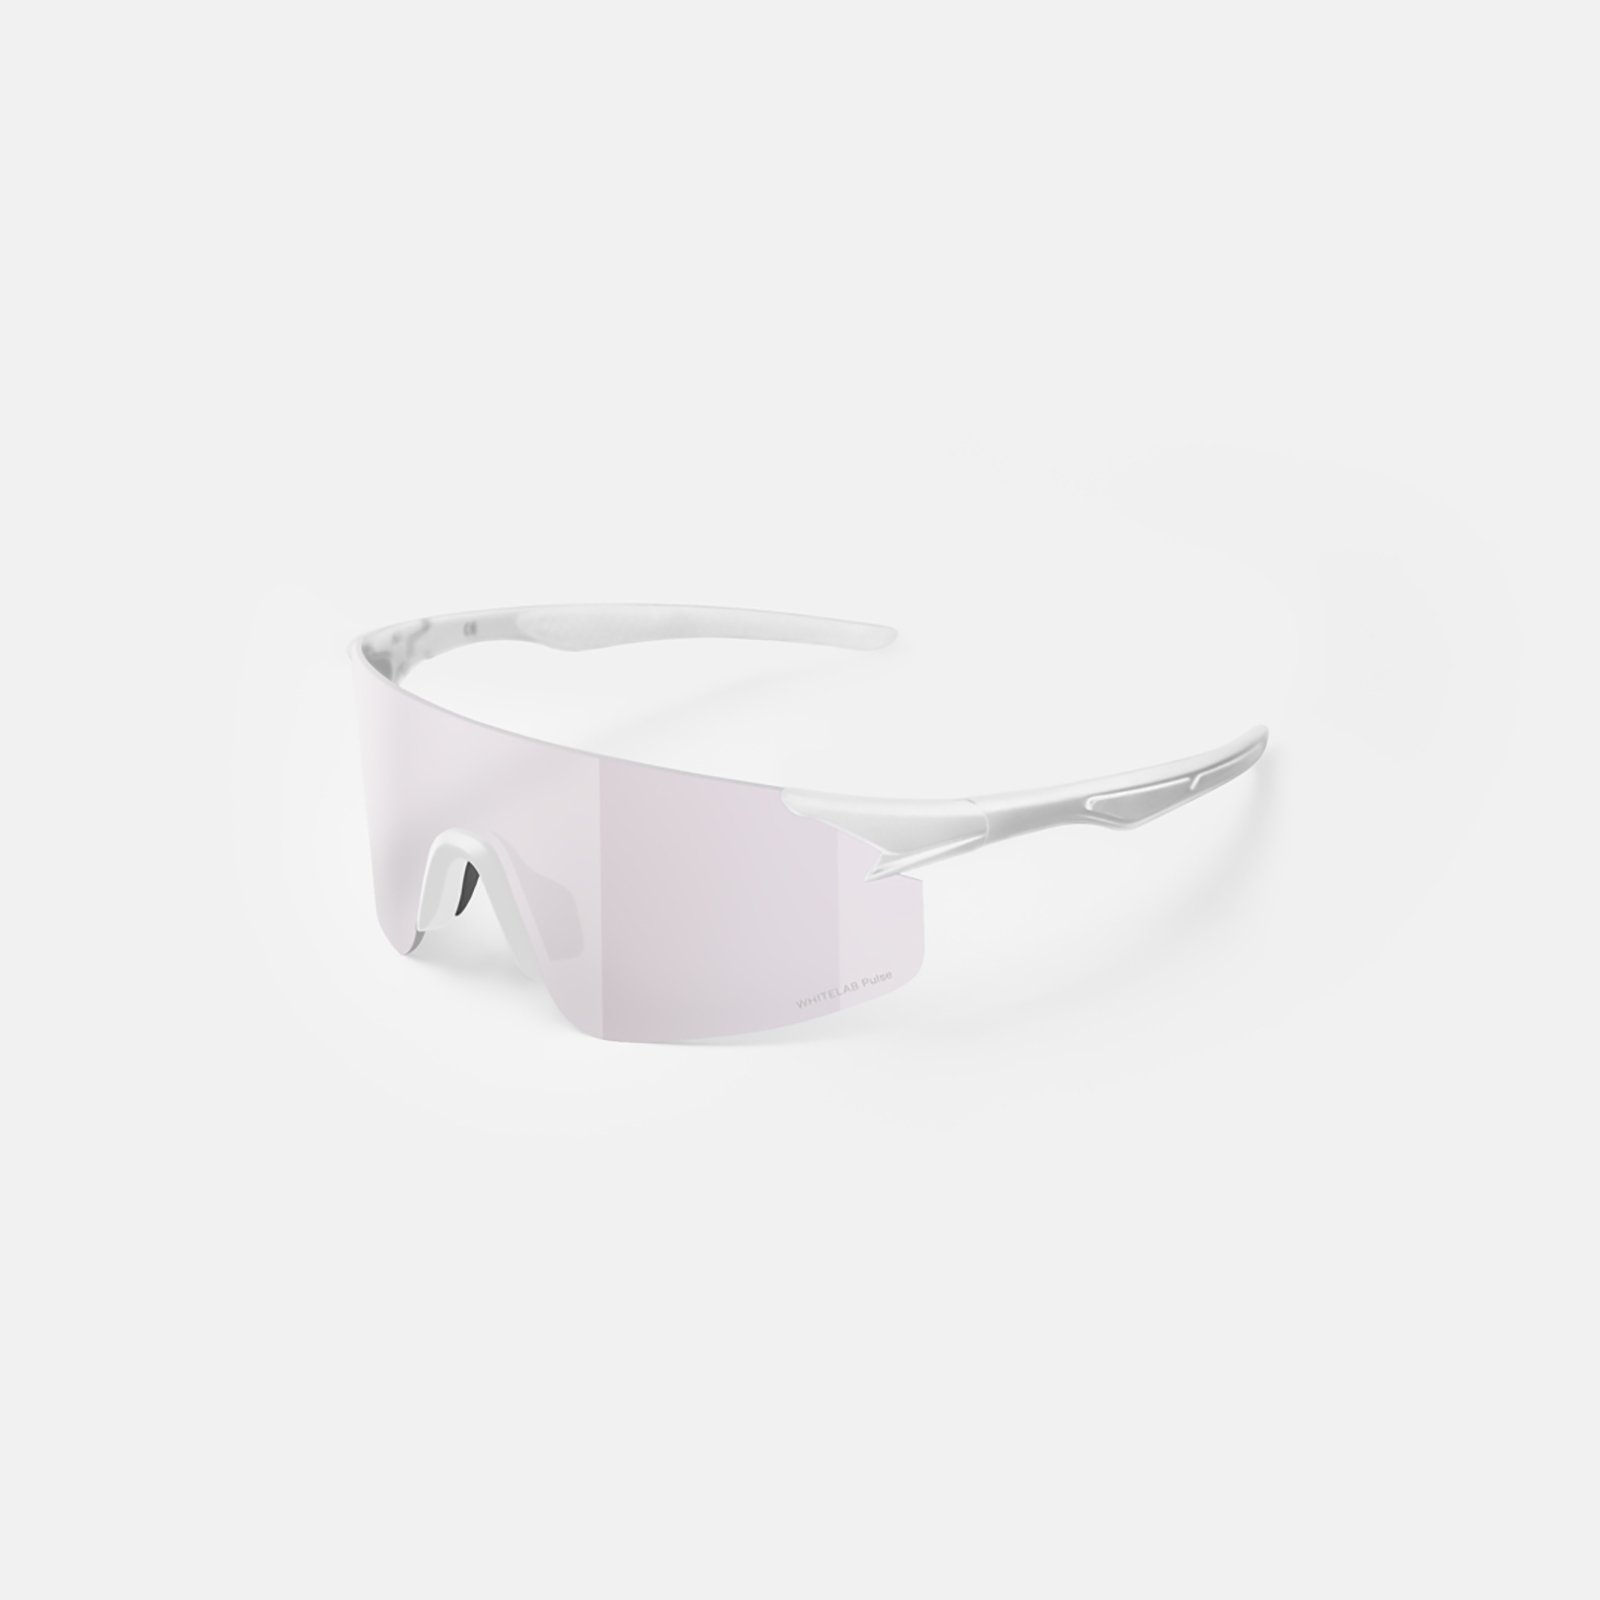  оранжевые солнцезащитные очки White Lab Visor Visor white/bronze - цена, описание, фото 3